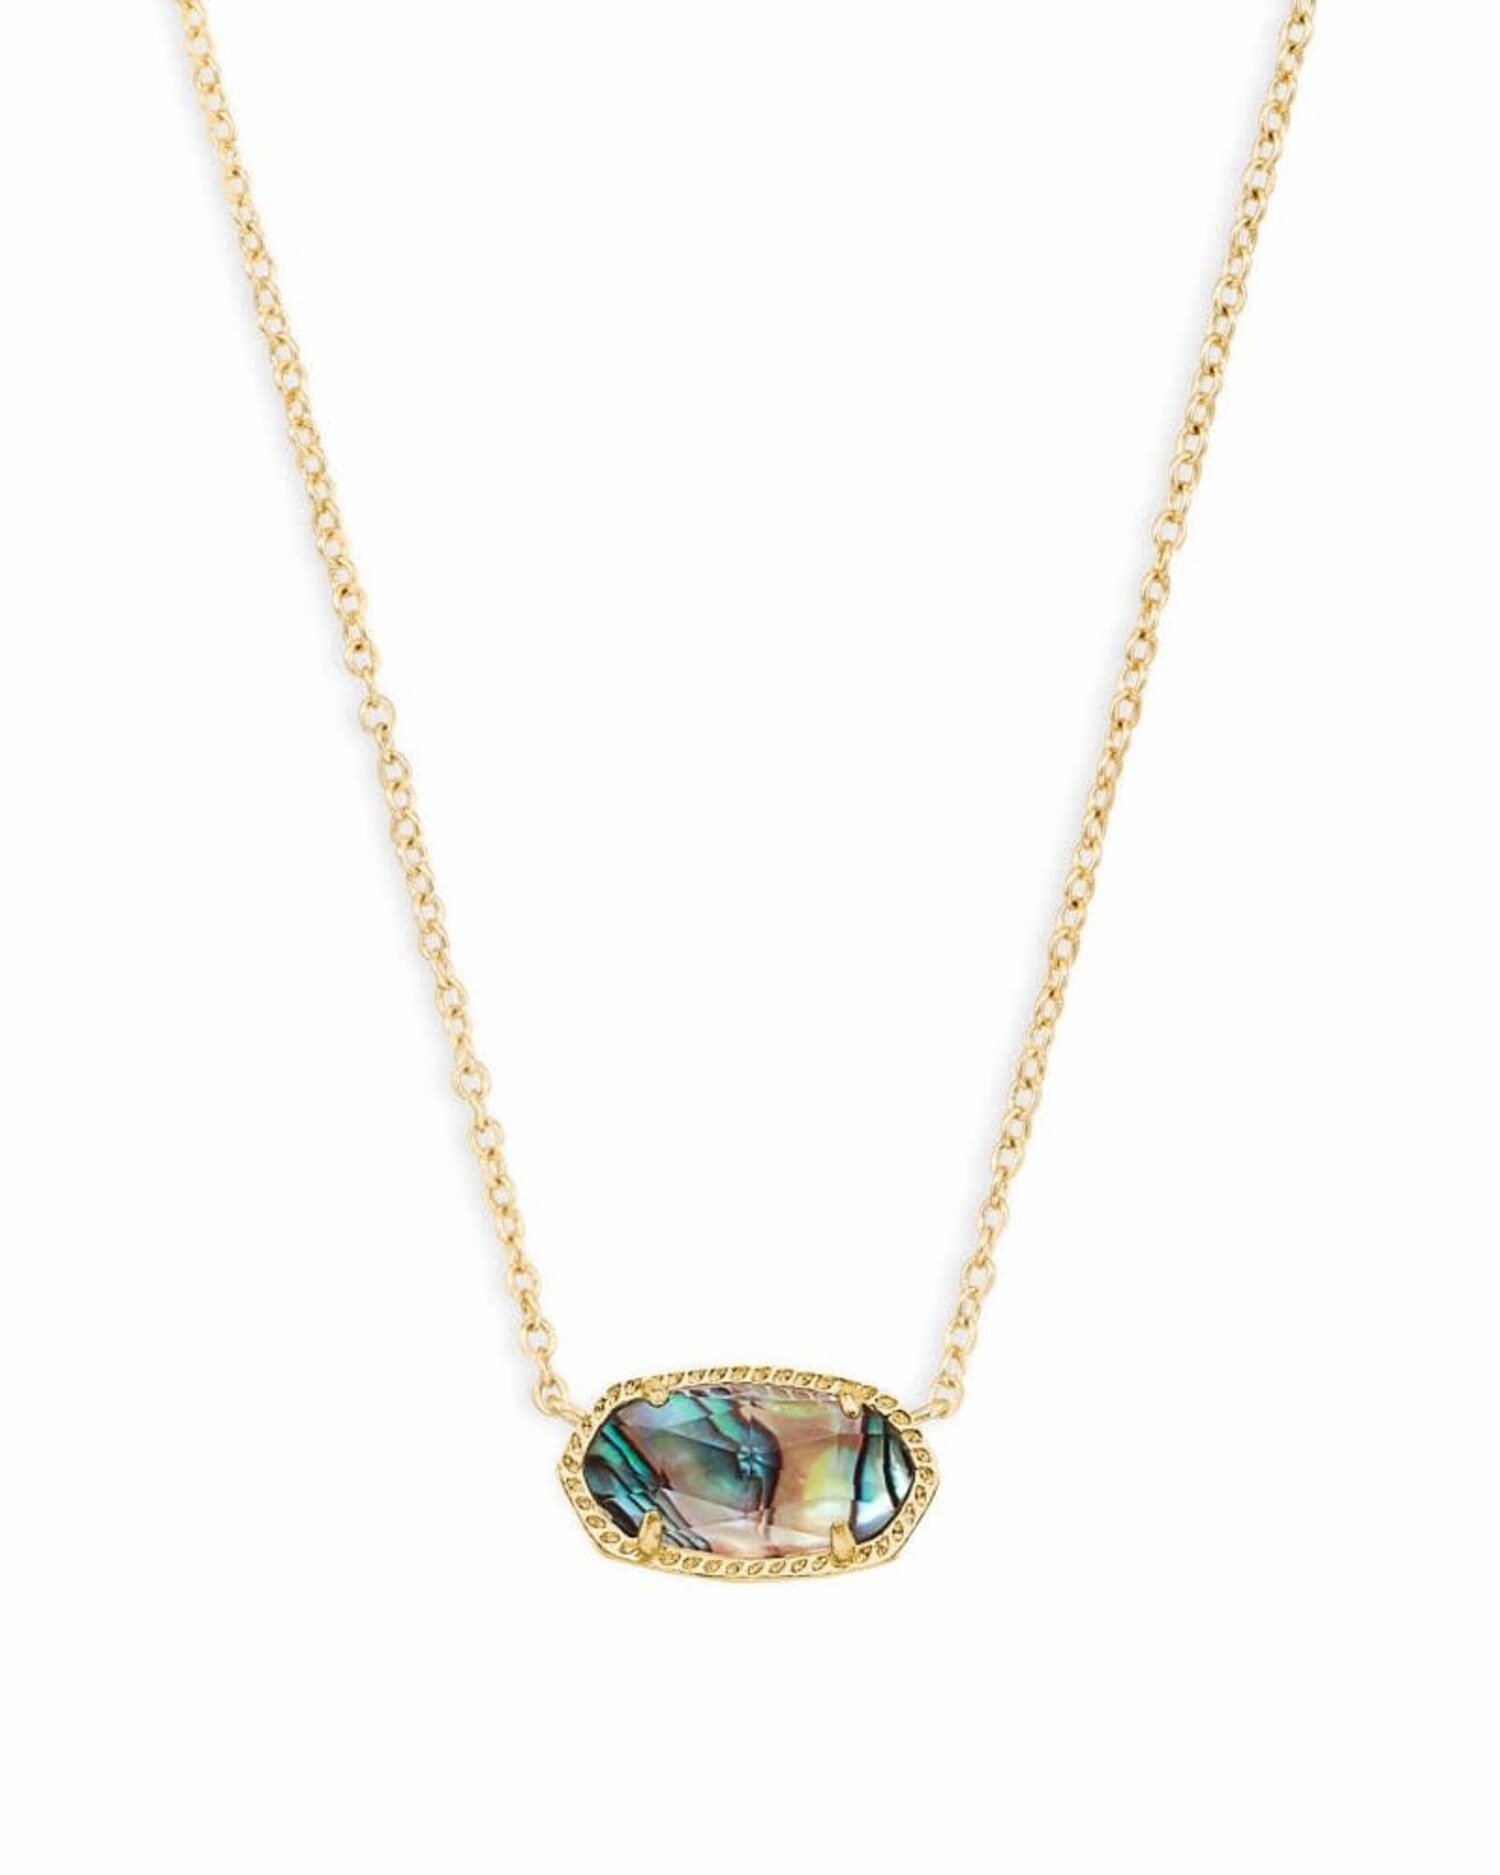 Davis Satellite Pendant Necklace | Jewelry, Necklace, Pendant necklace